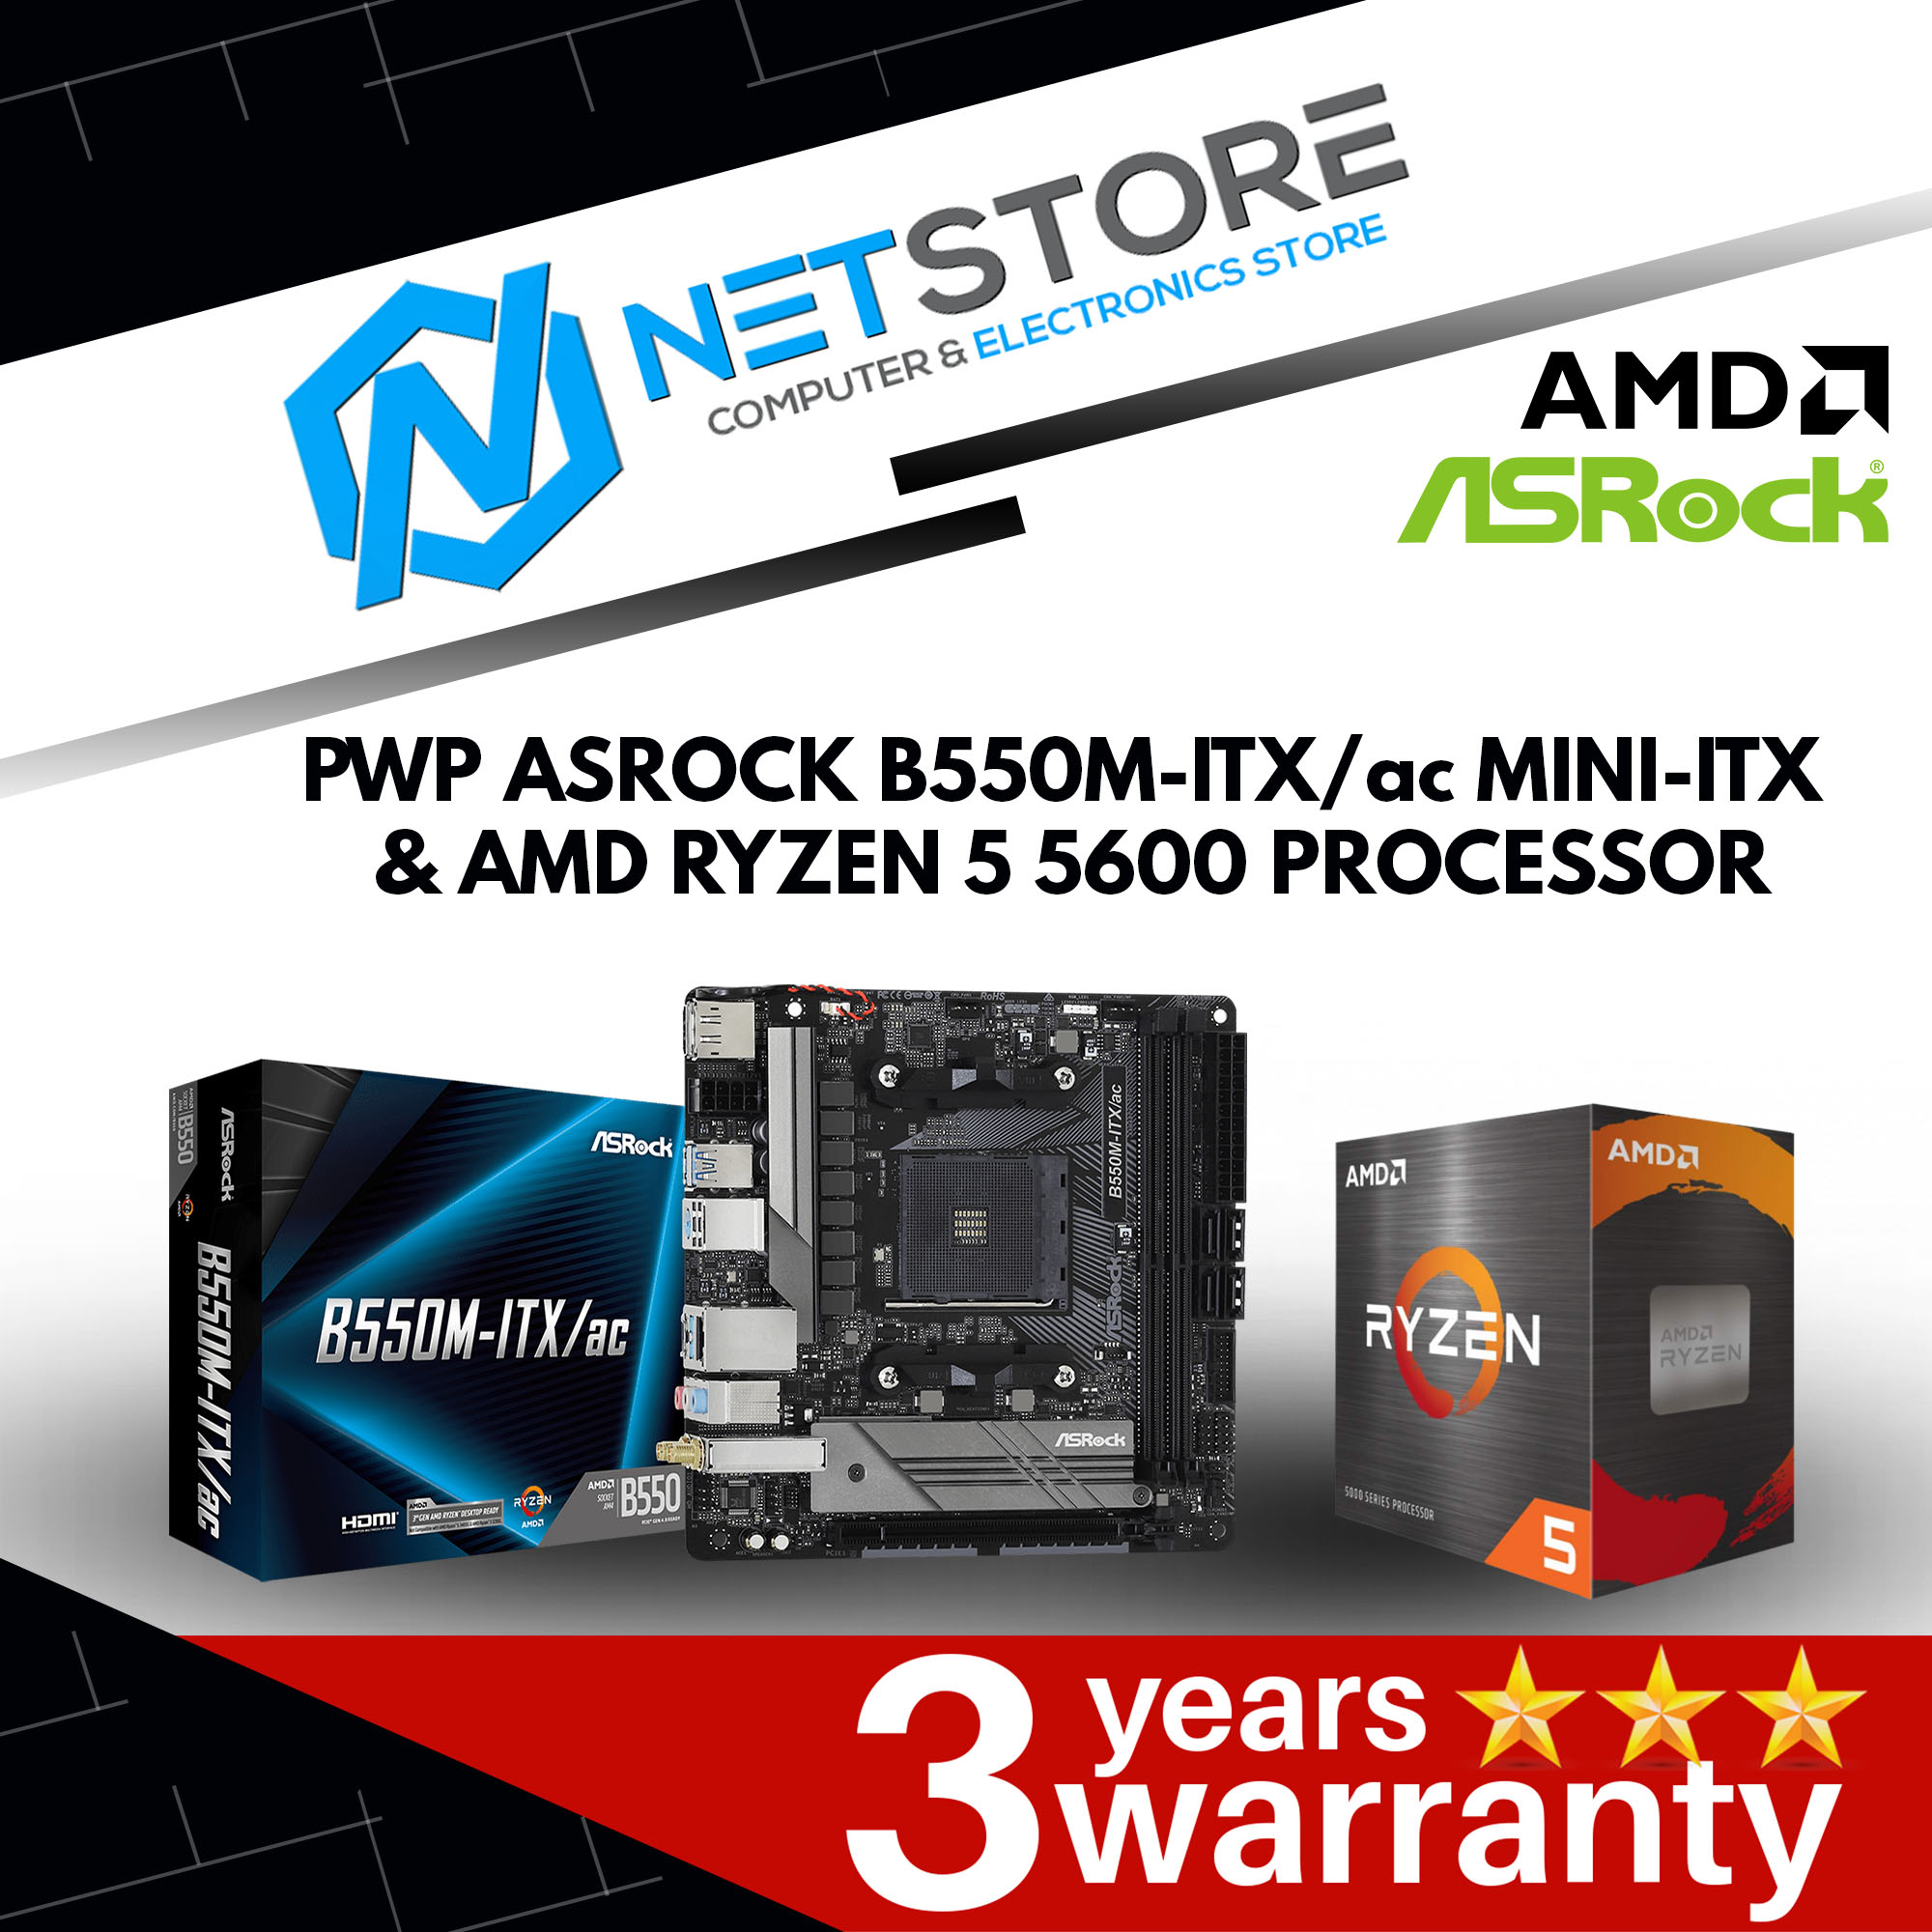 PWP ASROCK B550M-ITX/ac Mini-ITX &amp; AMD RYZEN 5 5600 PROCESSOR